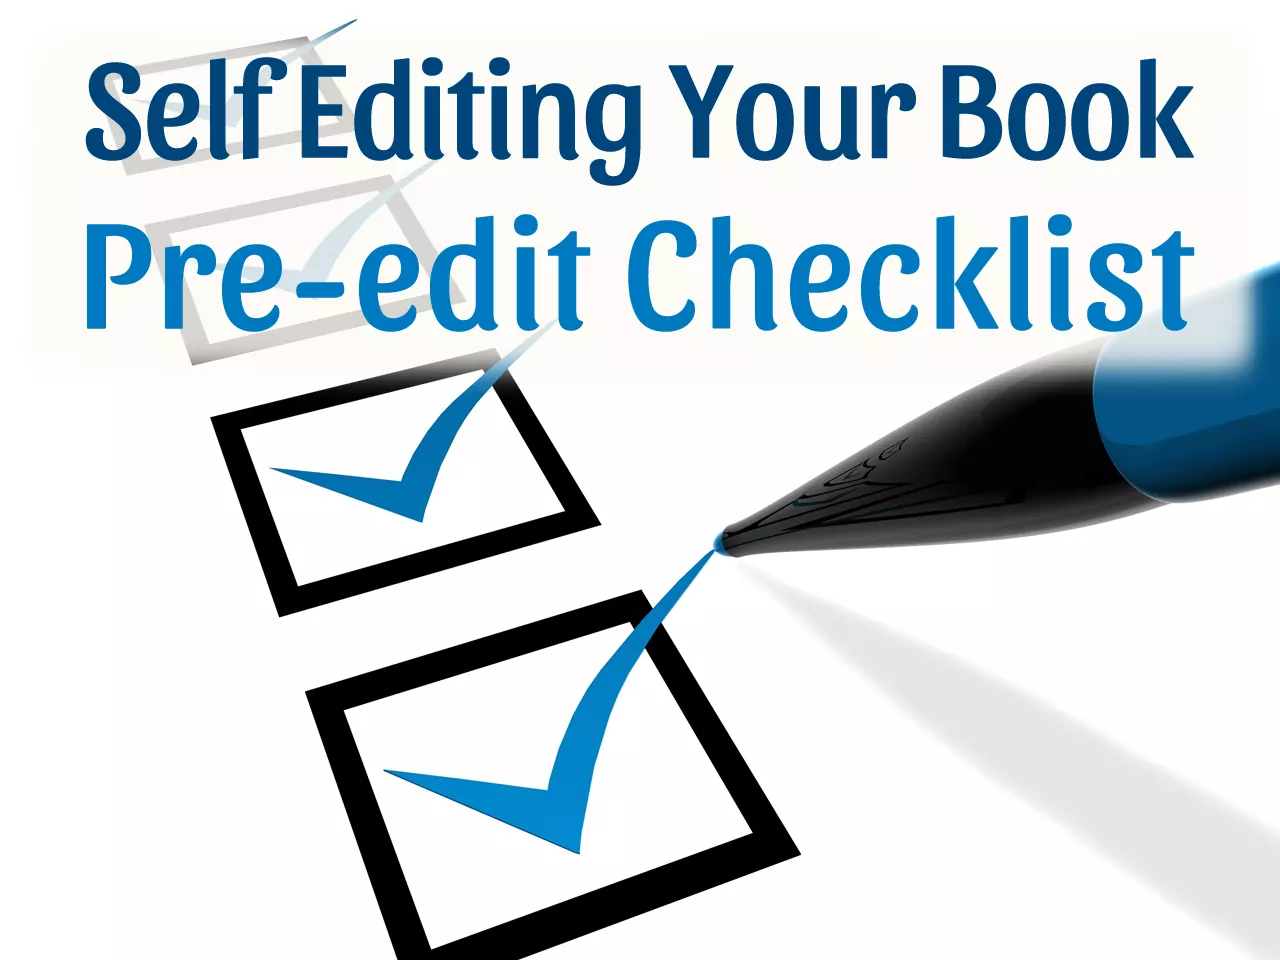 Self-editing Your Book: Pre-edit Checklist